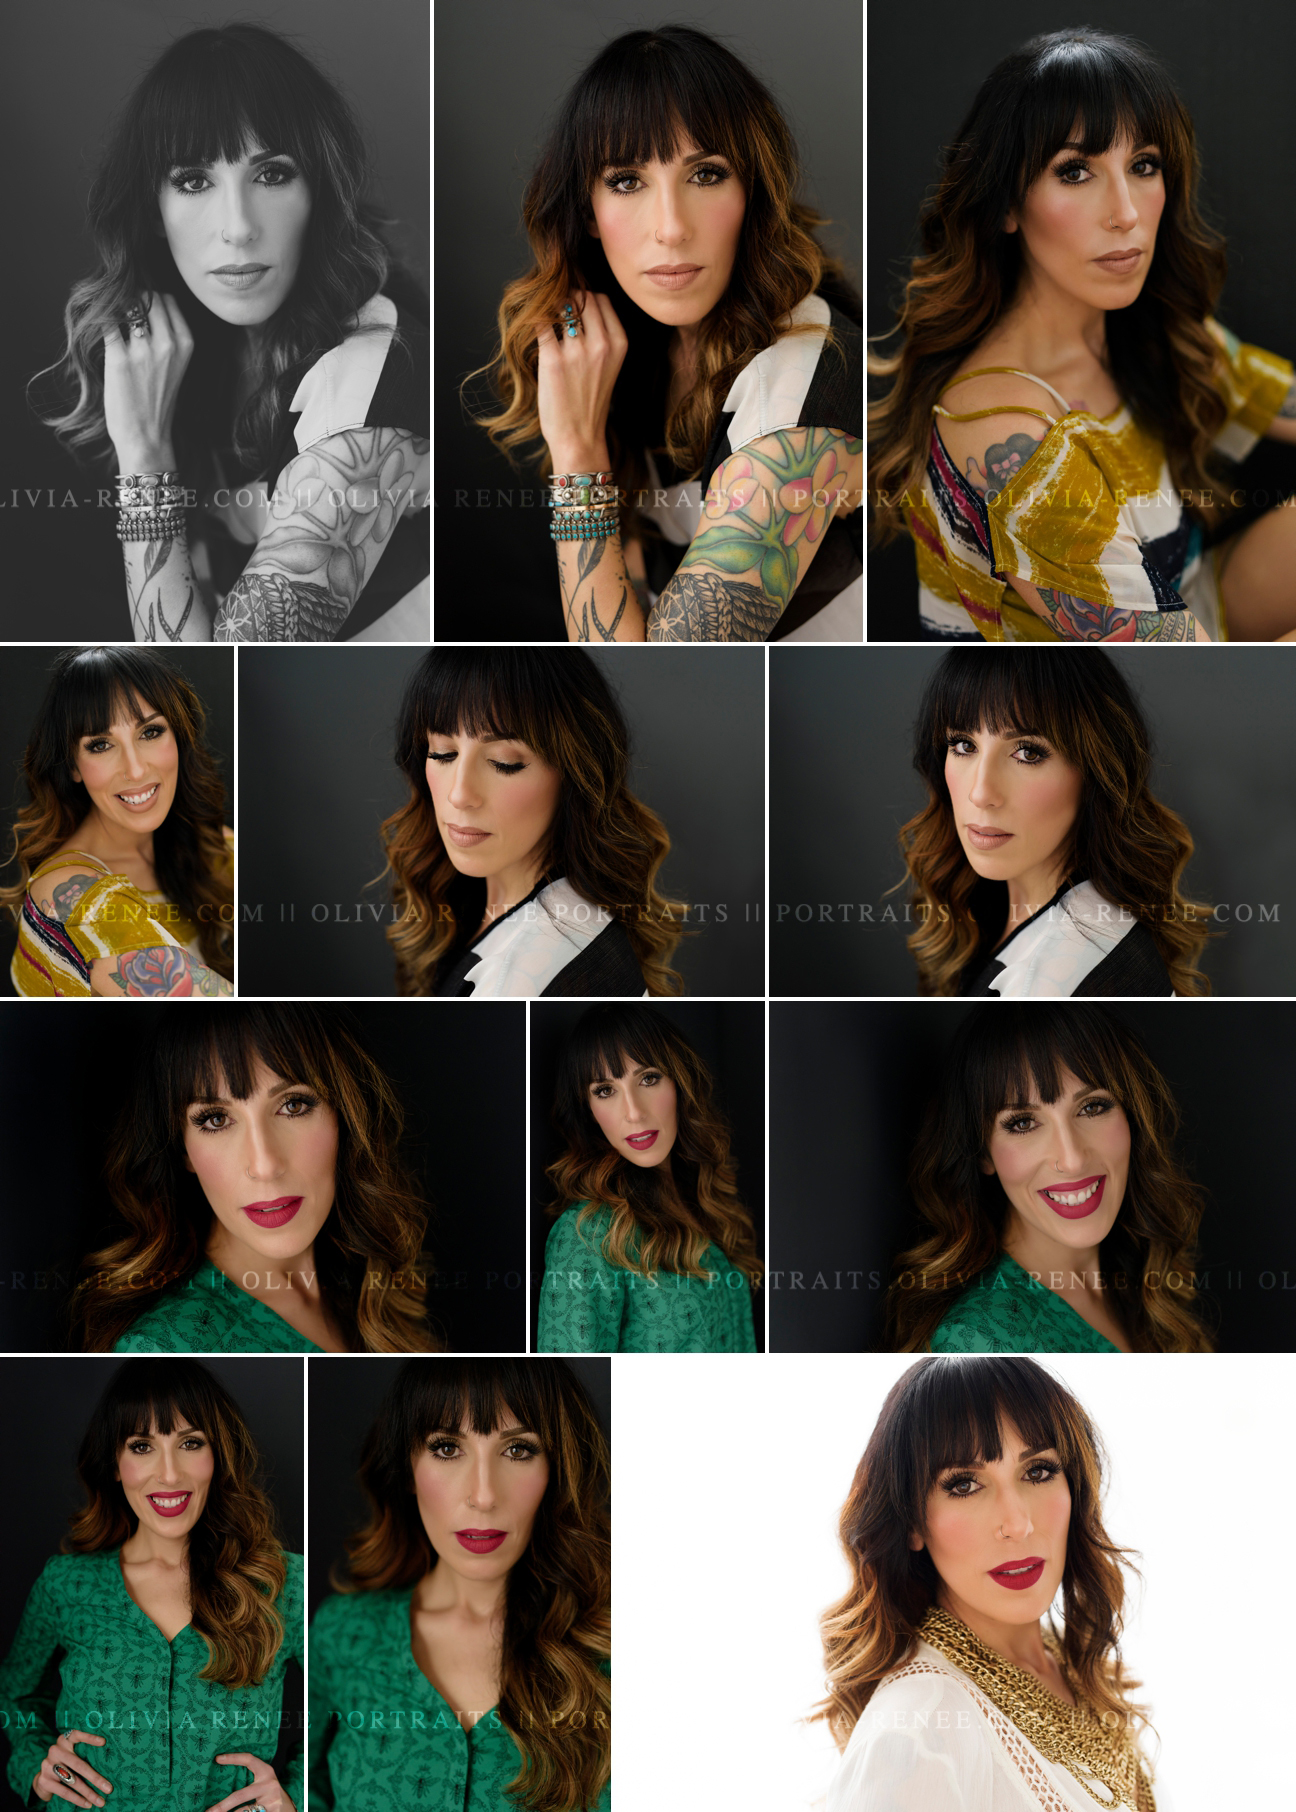 Olivia Renee Portraits | portraits.olivia-renee.com | Shante Matlock Rodan+Fields Consultant Makeup Artist Tattoos Personal Branding Headshots